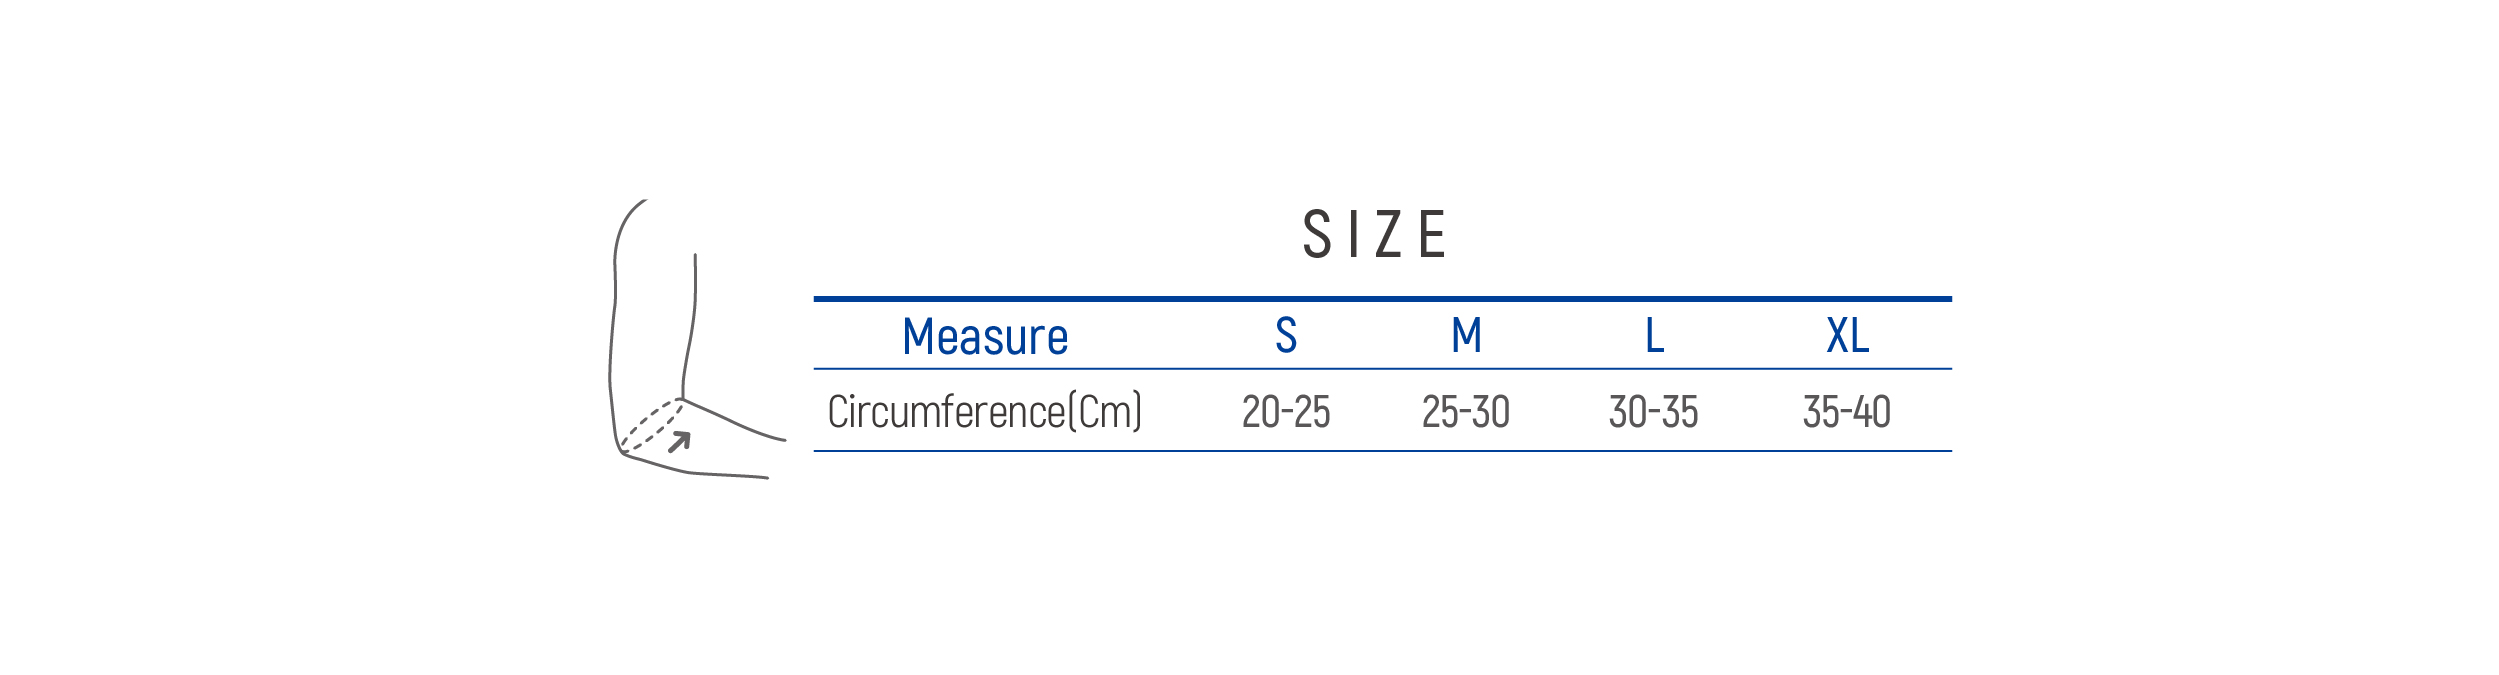 DR-E015 Size table image